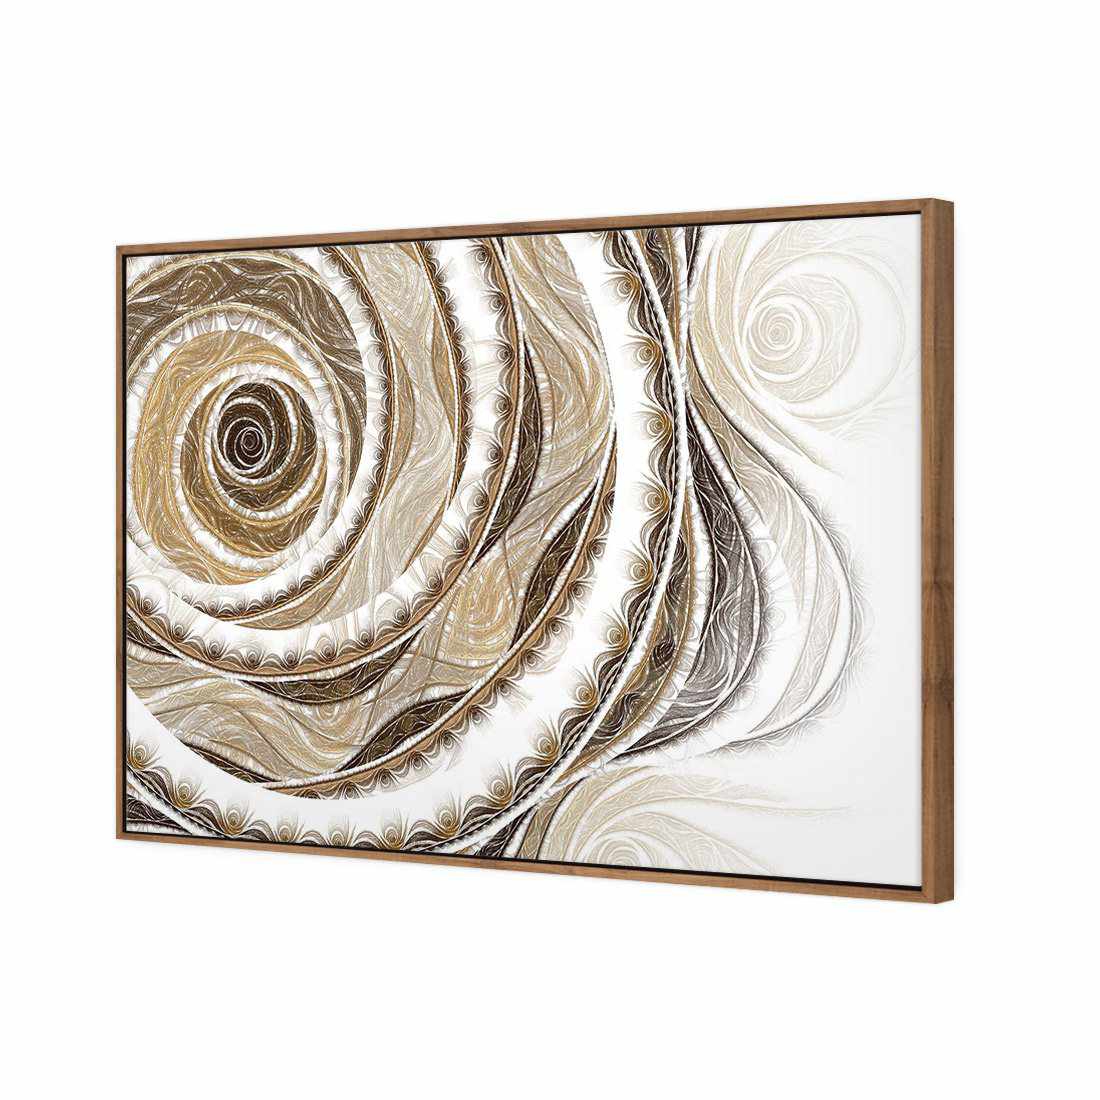 Copper Rose Canvas Art-Canvas-Wall Art Designs-45x30cm-Canvas - Natural Frame-Wall Art Designs